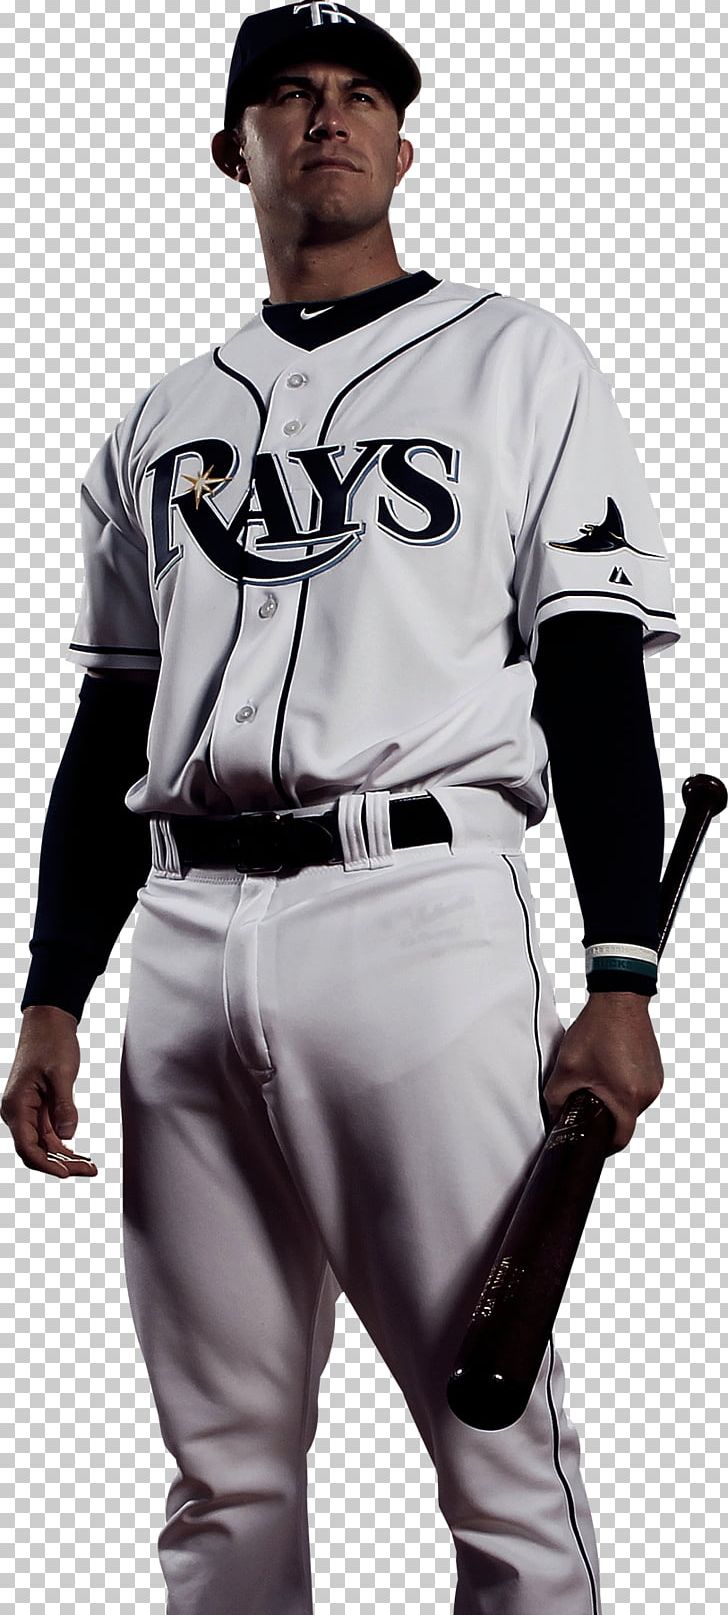 Baseball Uniform Baseball Positions Tampa Bay Rays PNG, Clipart, American Football, Ball Game, Baseball, Baseball Bat, Baseball Bats Free PNG Download